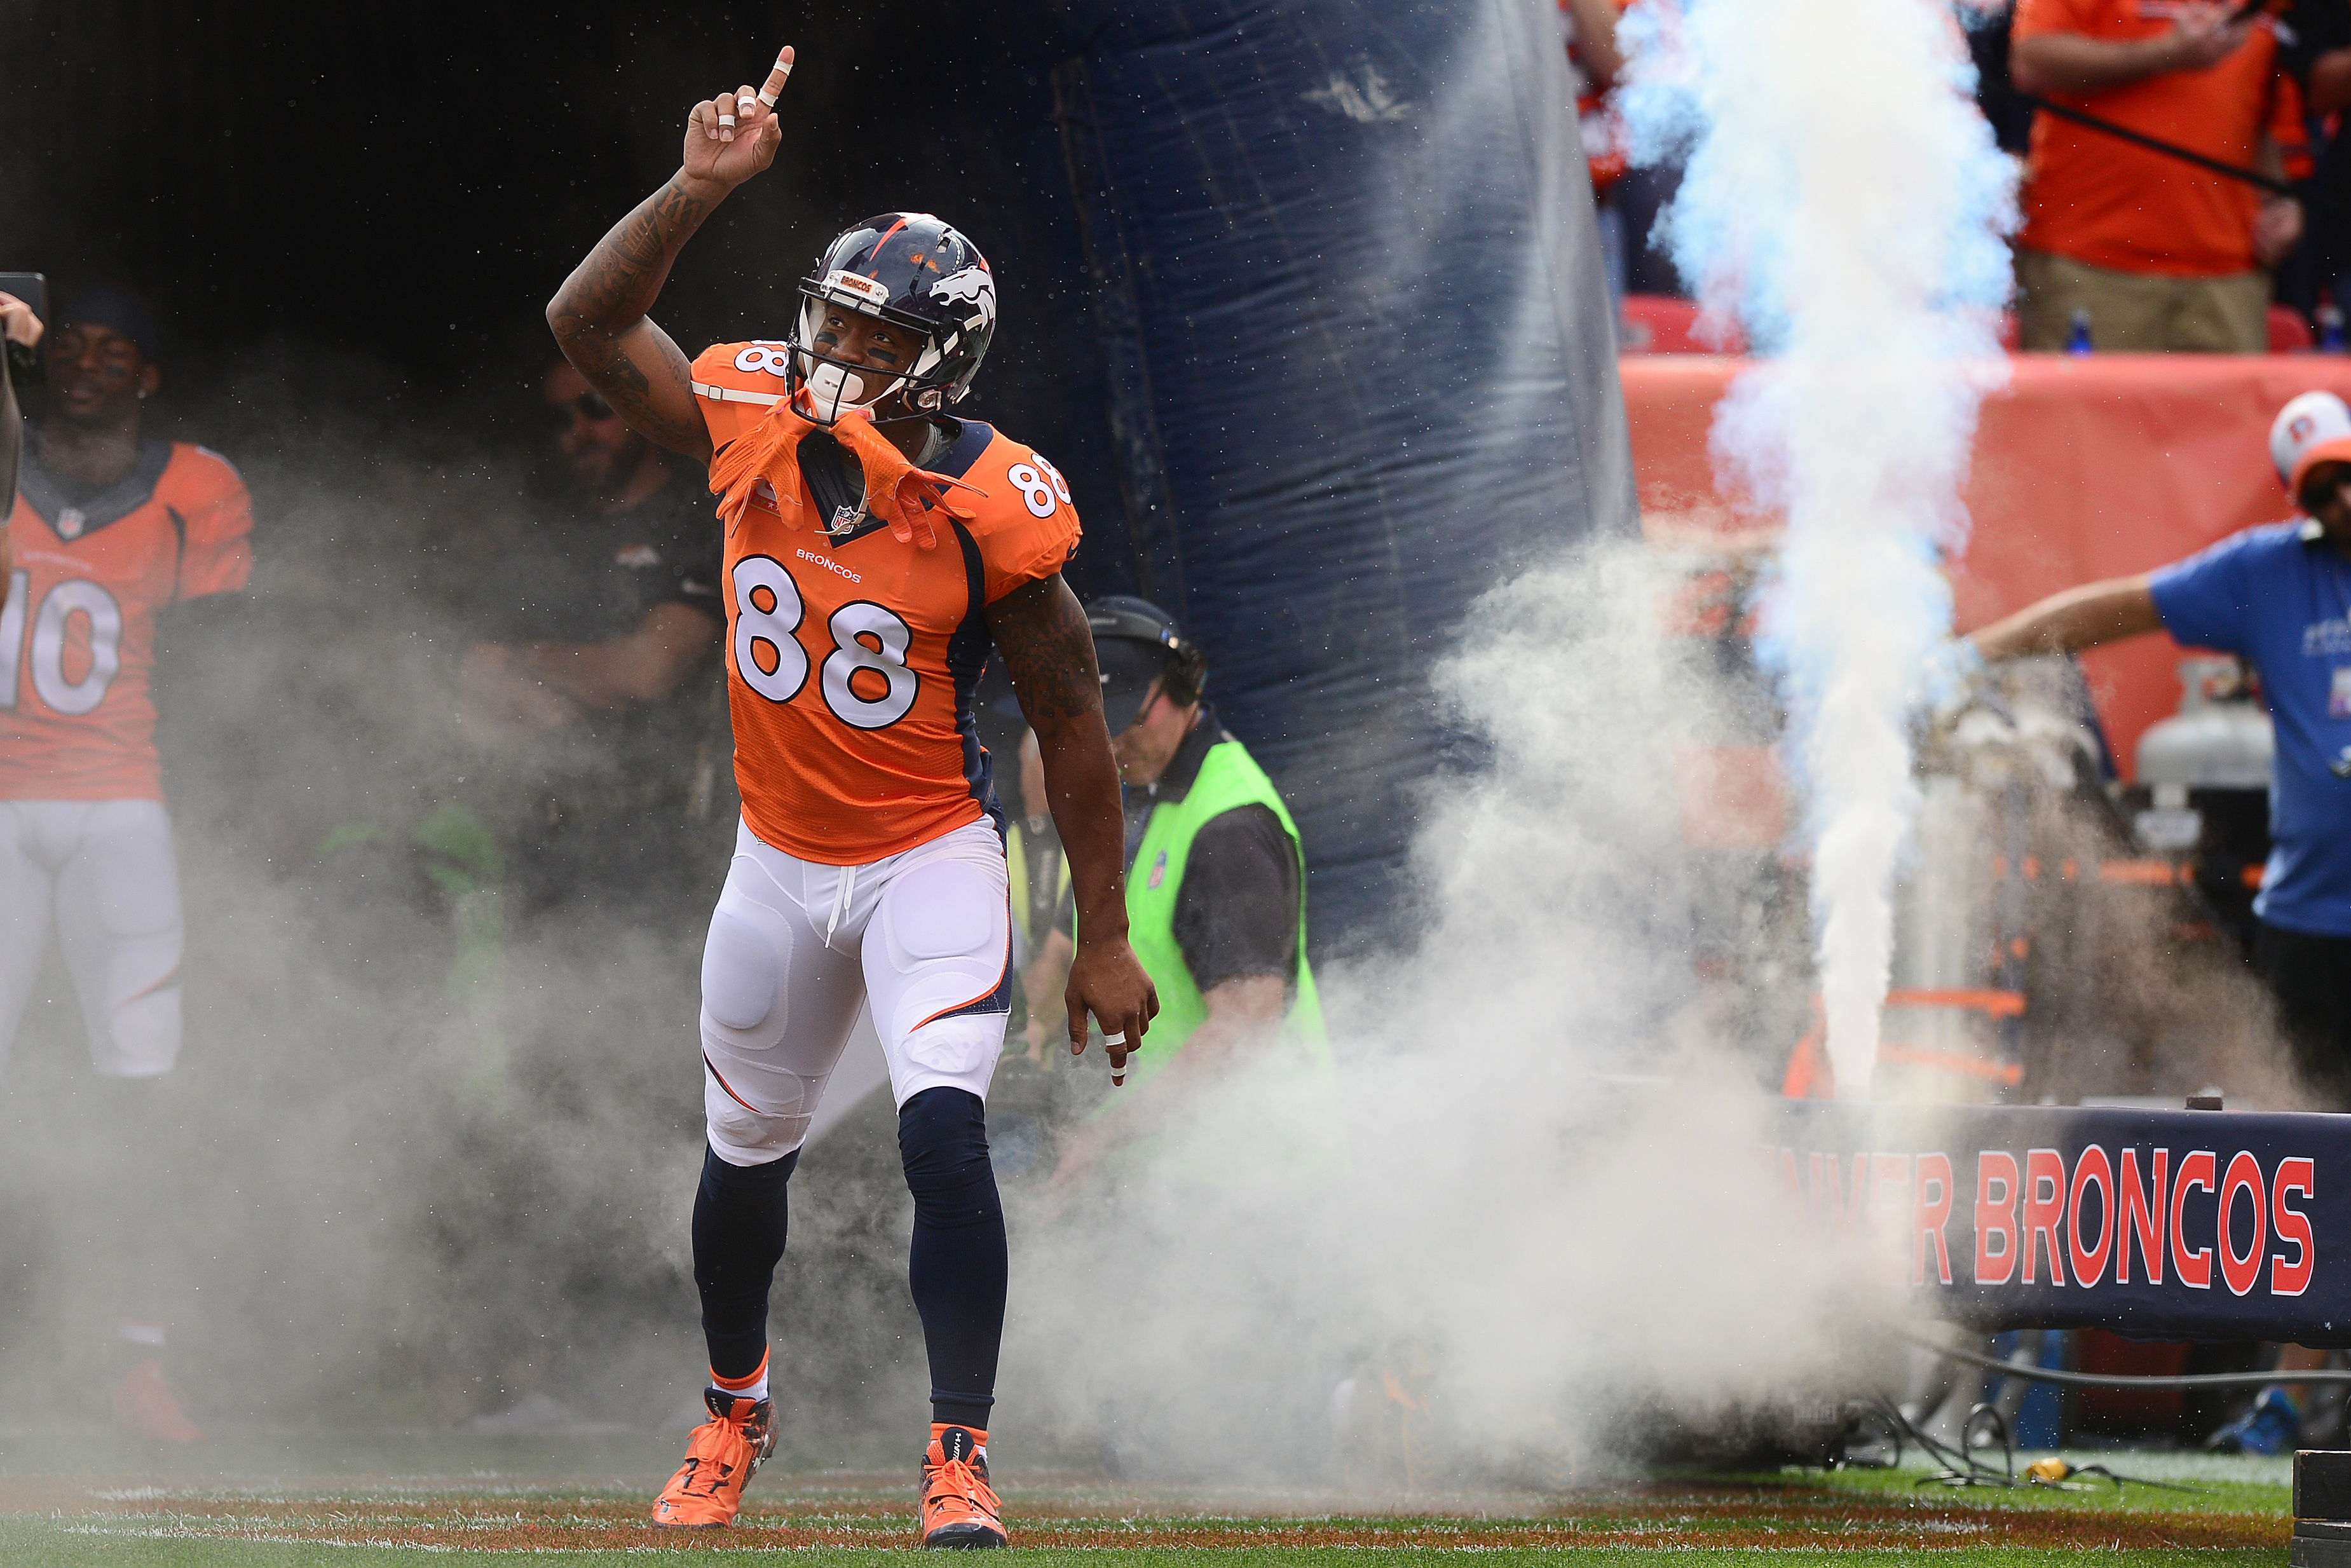 Denver Broncos: What's Demaryius Thomas' value in fantasy football?